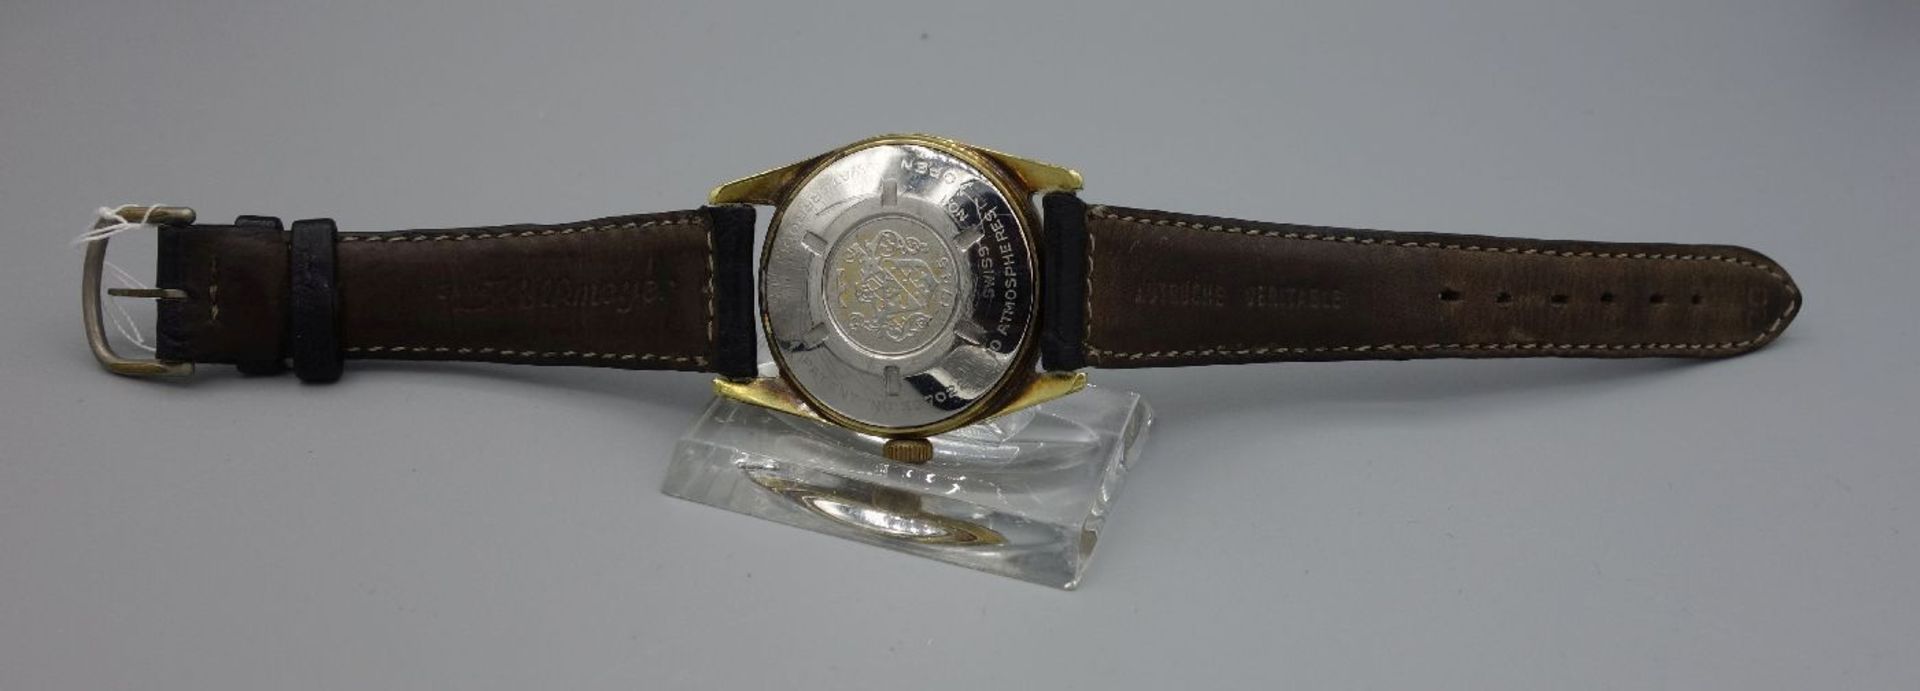 VINTAGE ARMBANDUHR - TECHNOS / wristwatch, Mitte 20. Jh., Automatik-Uhr, Manufaktur Gunzinger Freres - Image 5 of 5